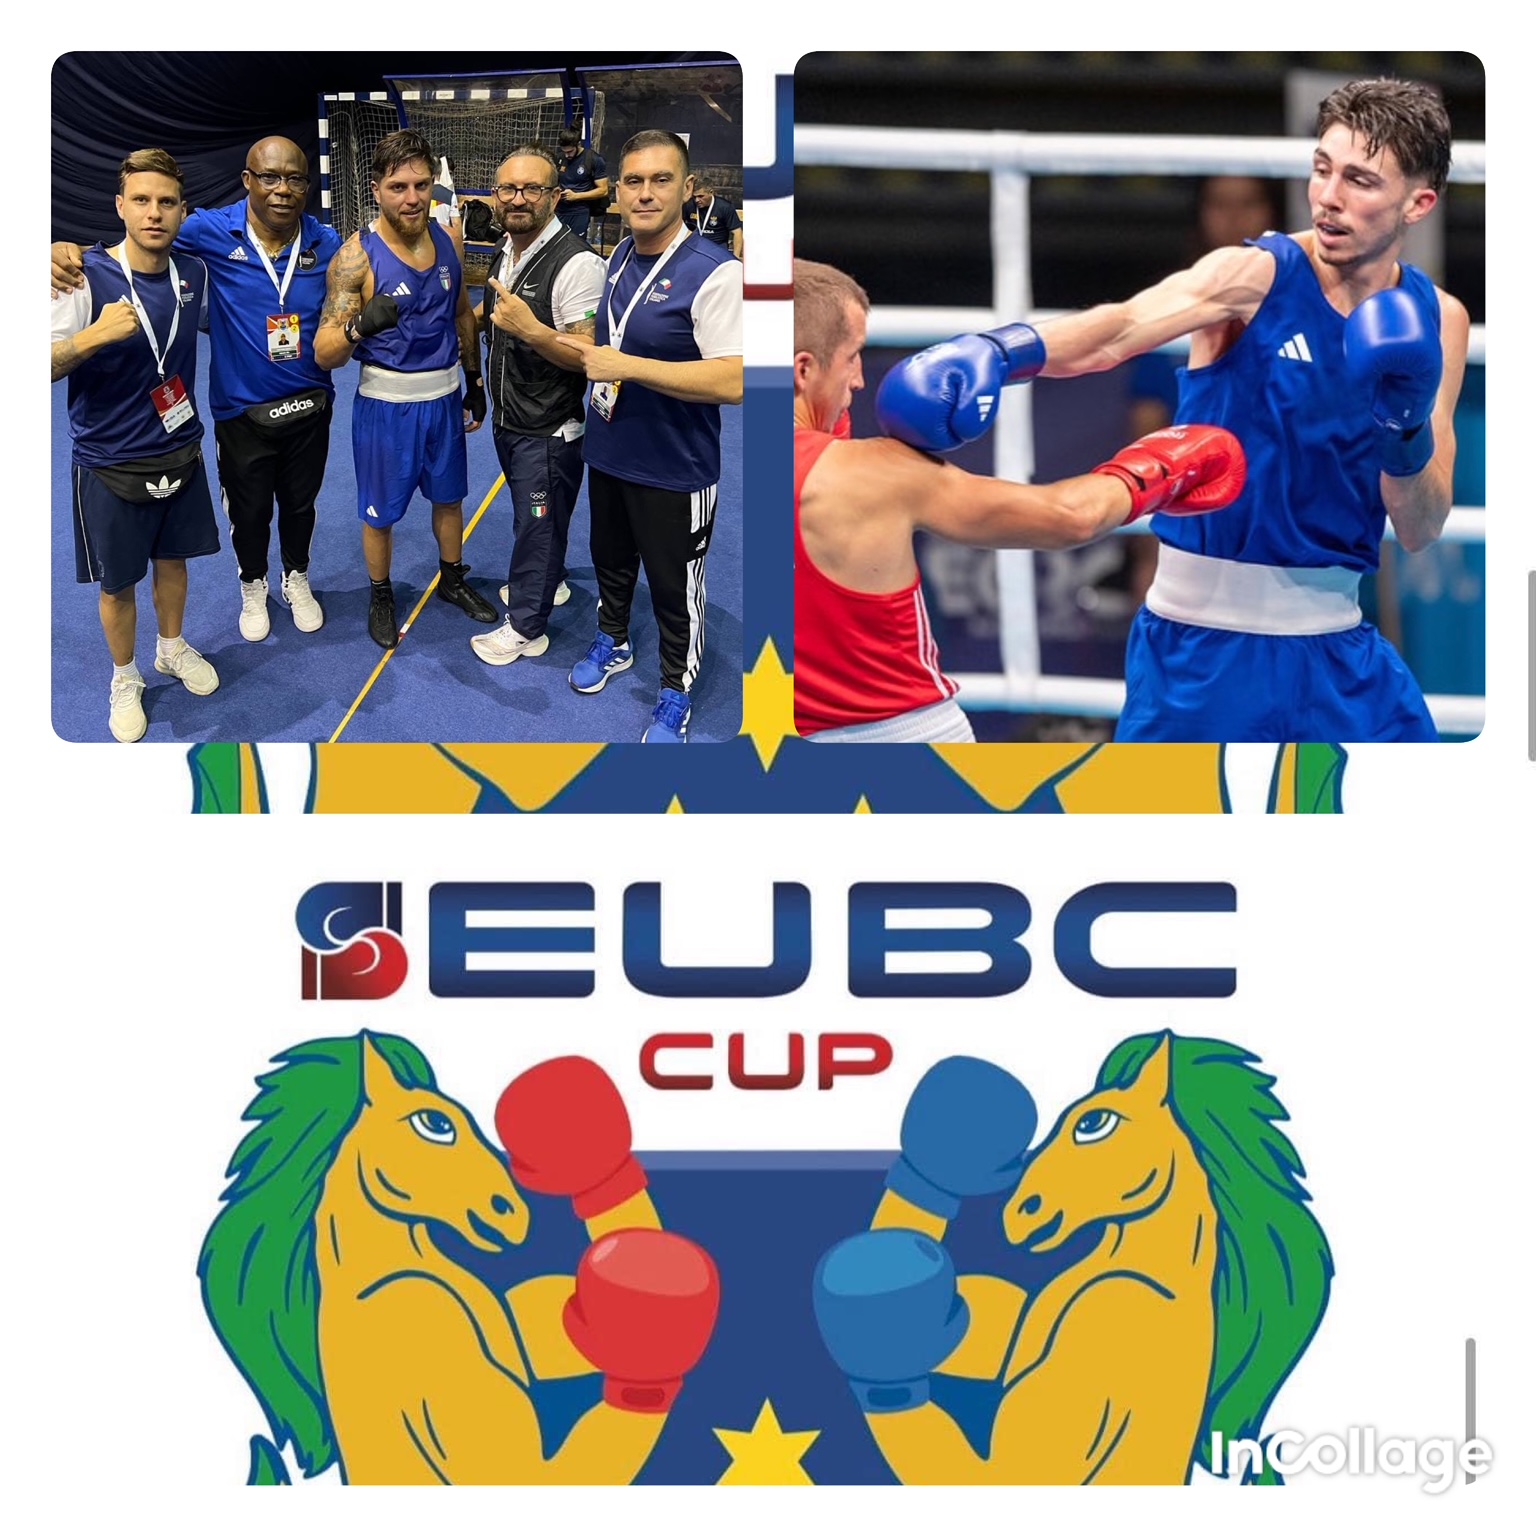 EUBC CUP BUVDA 2023:  DAY 3 - Vittorie per Cavallaro 80 Kg e Malanga 67 Kg + Programma Day 4 